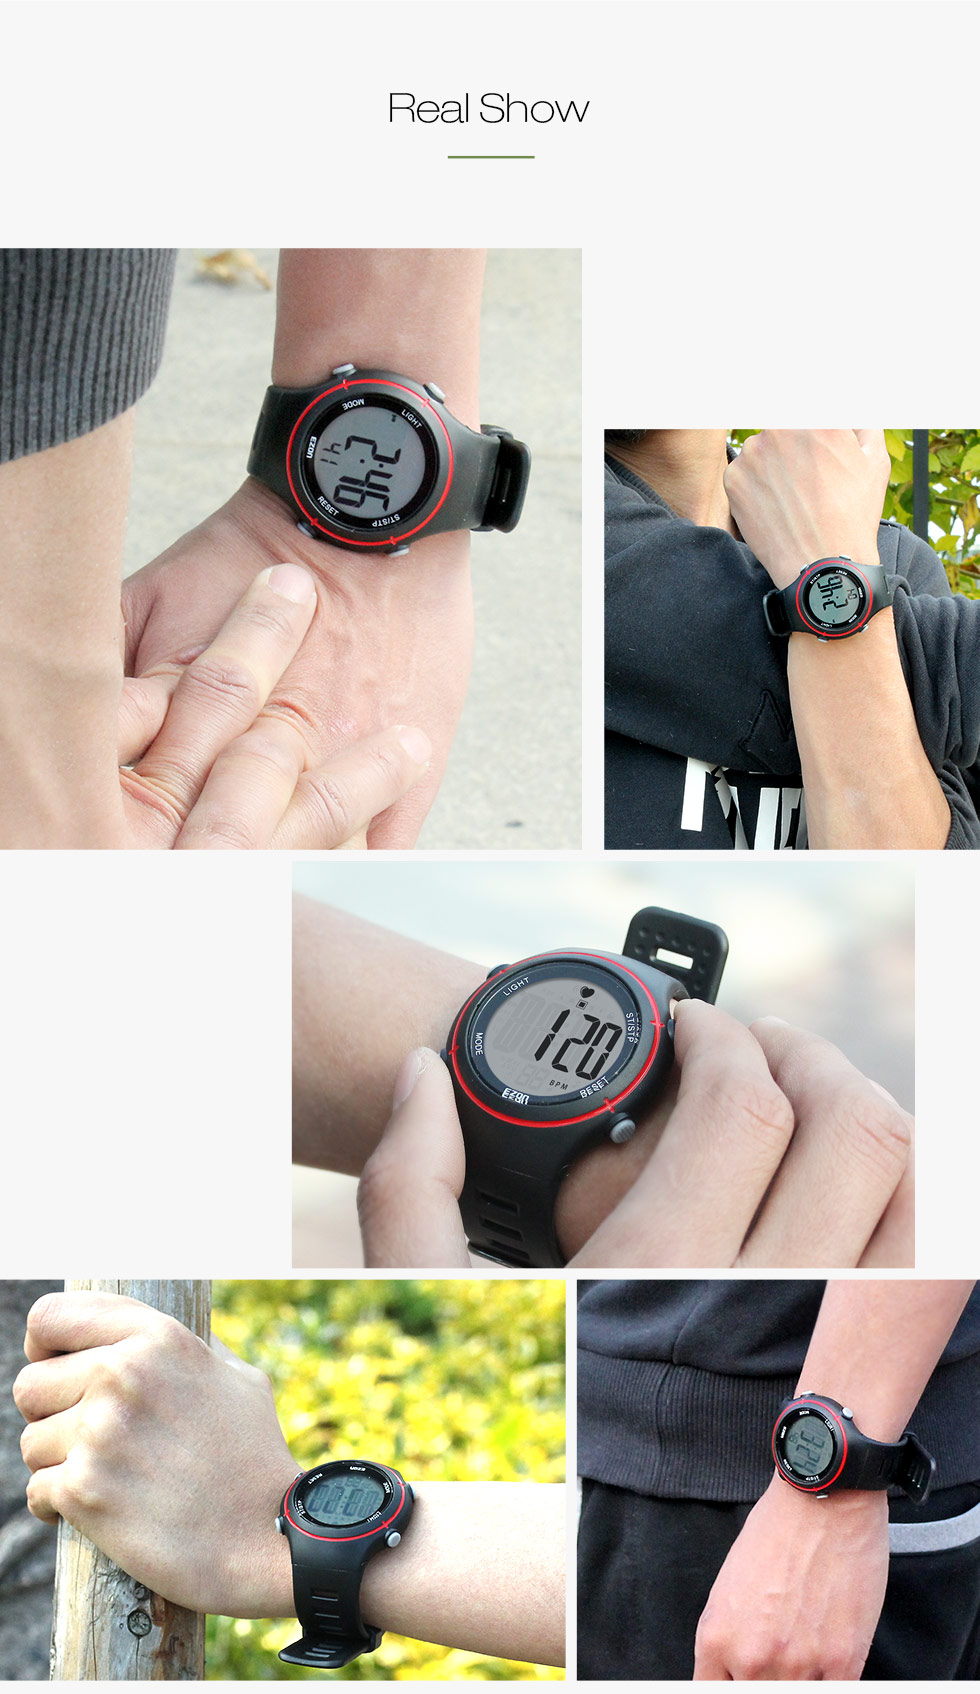 EZON-T037-Men-Watch-Sprot-Heart-Rate-Monitor-Chronograph-Alarm-Outdoor-Sport-Digital-Watch-1268431